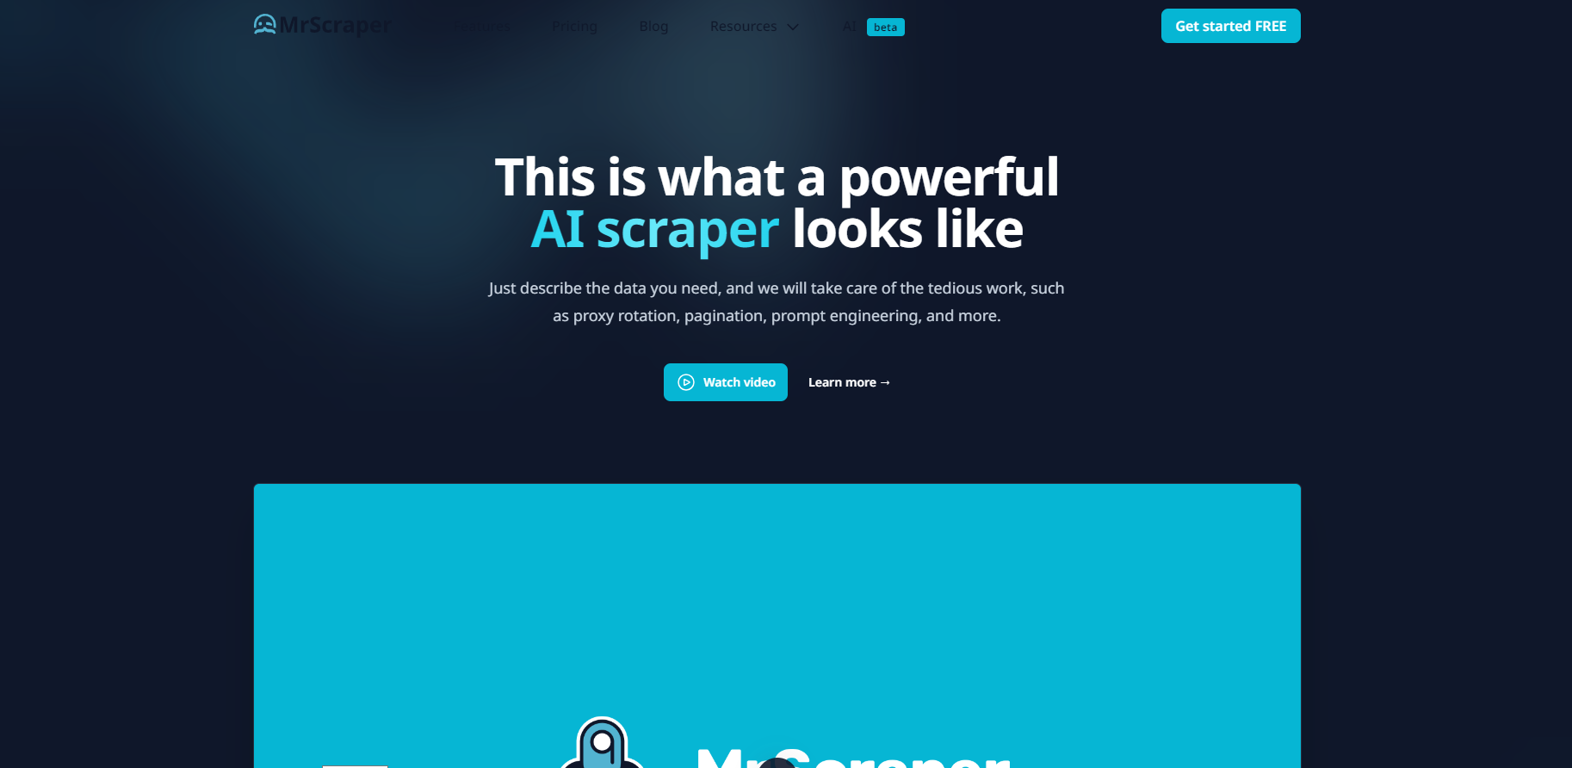 MrScrapper website